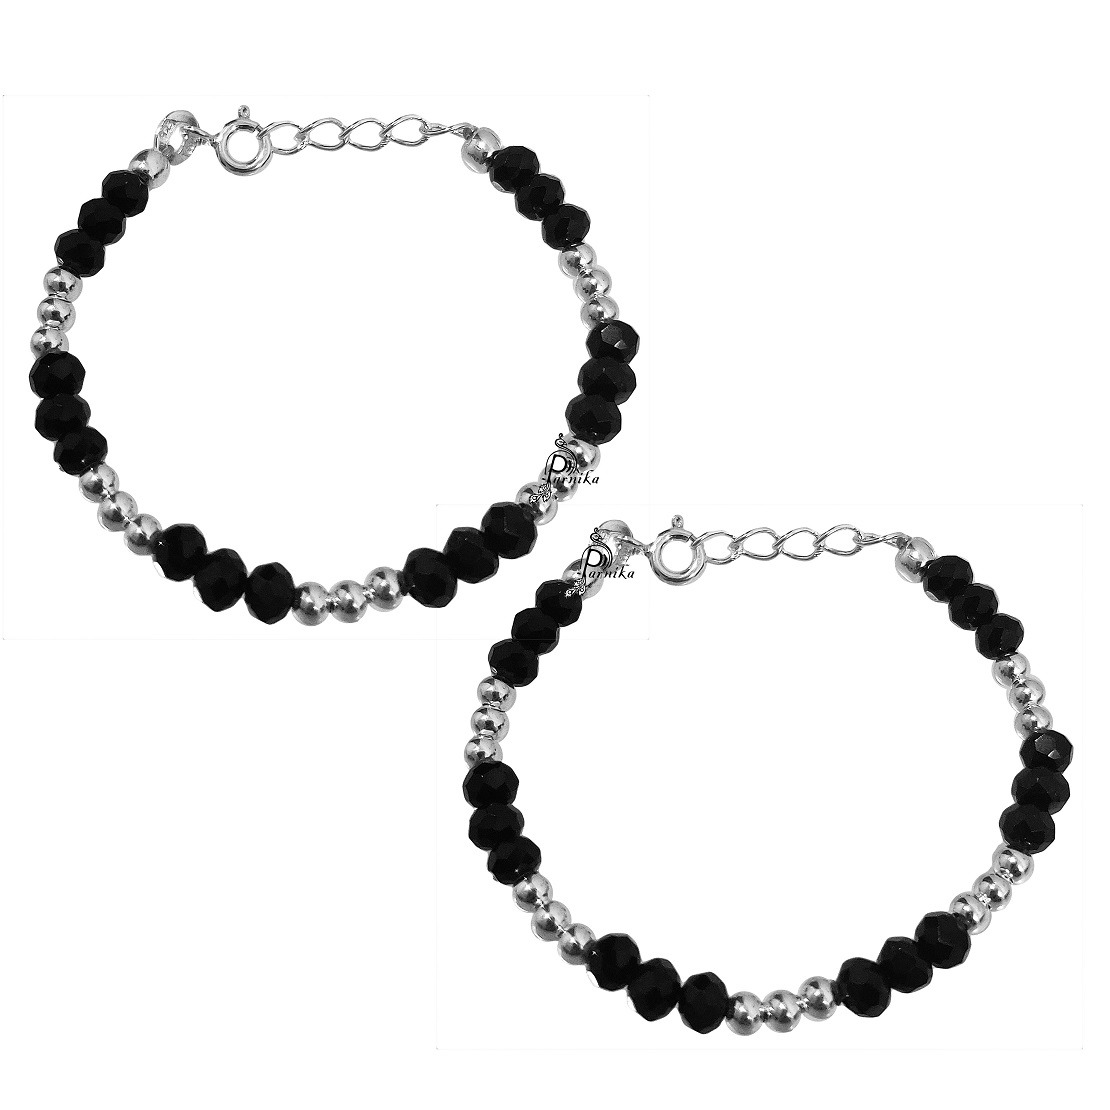 Men's Silver Chain Tennis Bracelet with CZ Diamonds - Atolyestone